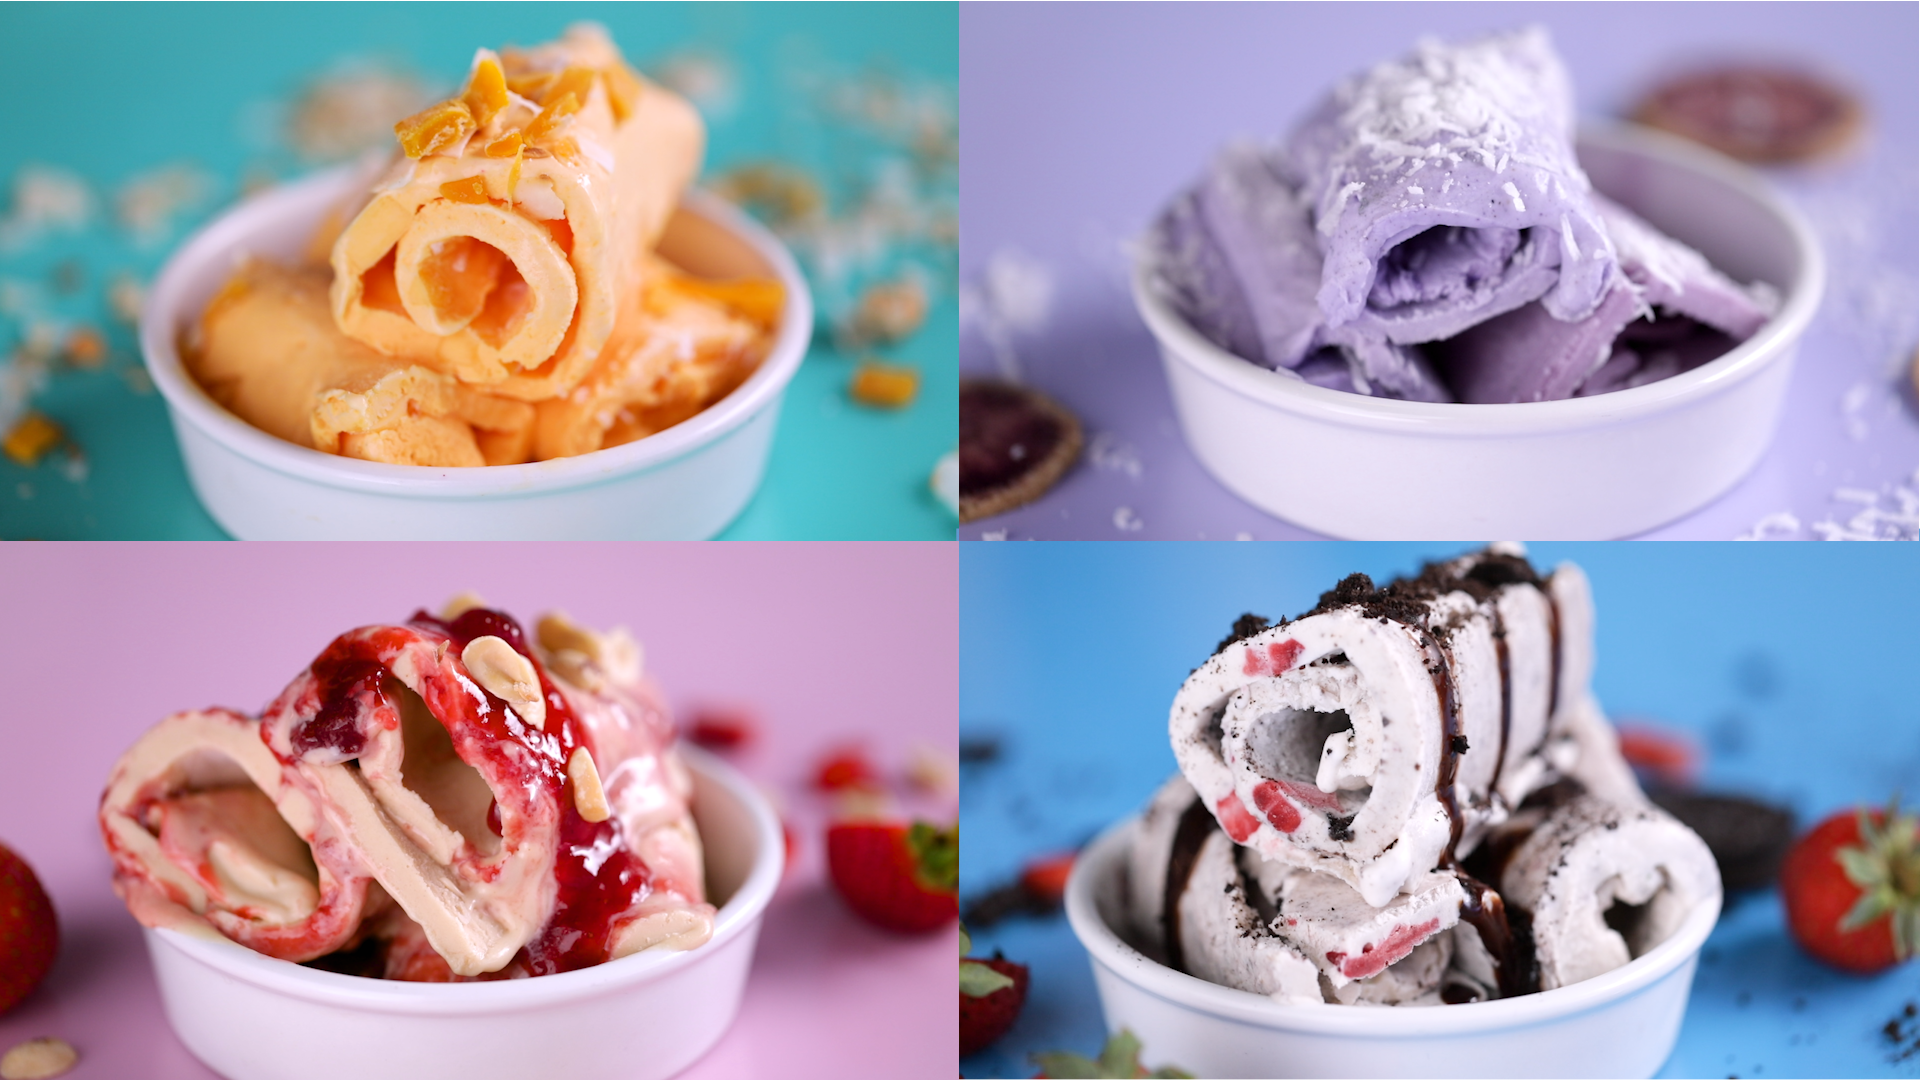 Ice roll. Тайское ролл мороженое. Ice Cream Roll тайское мороженое. Тайское жареное мороженое. Тайское жареное ролл мороженое.